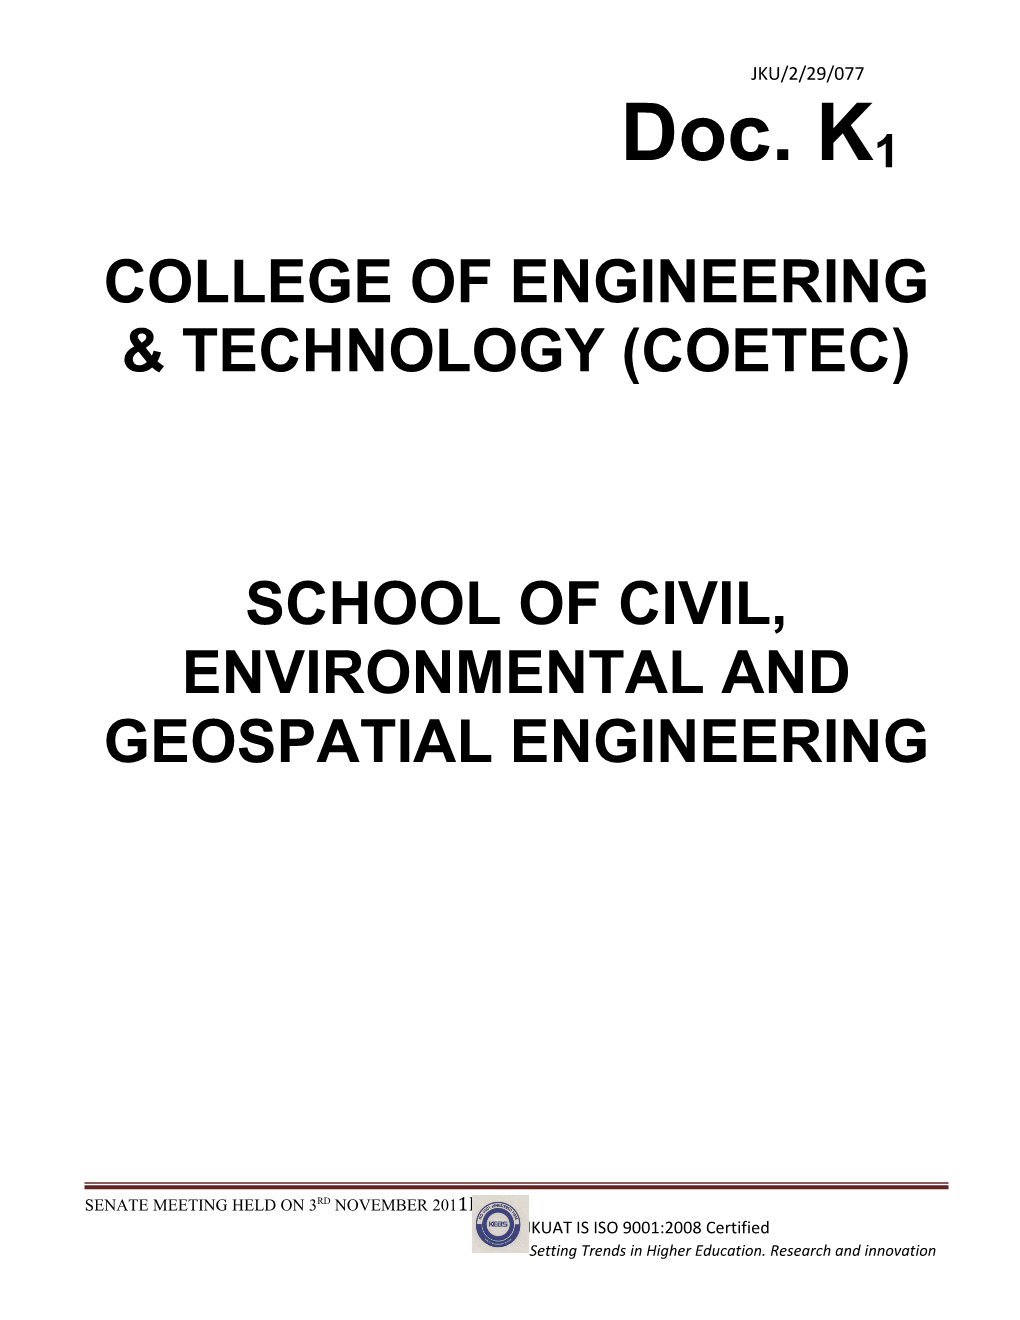 College of Engineering & Technology (Coetec)